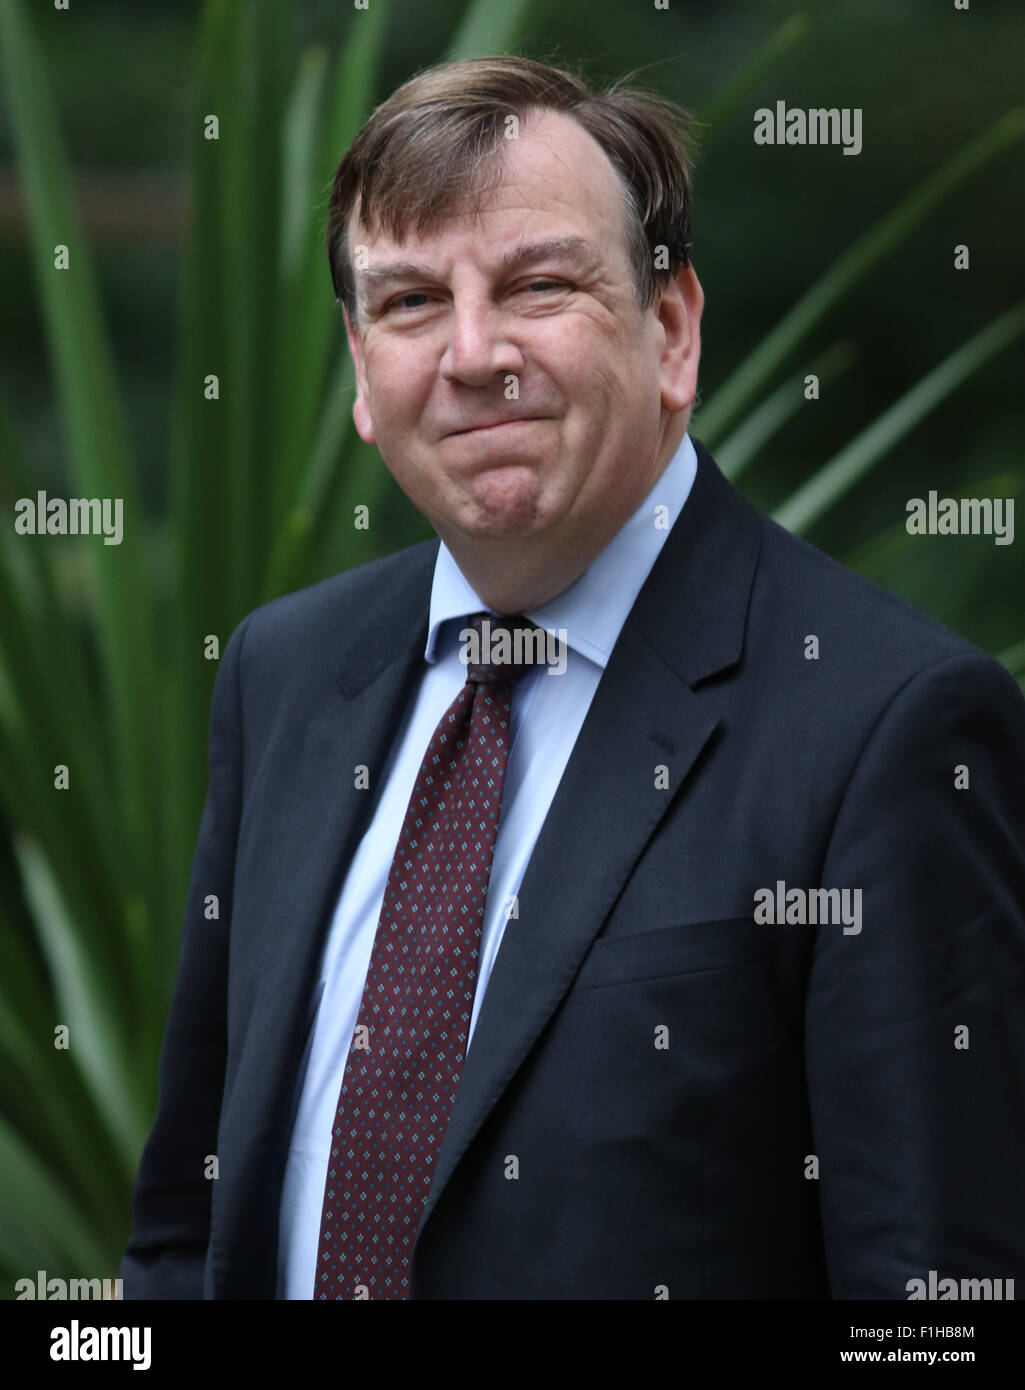 London, UK, 14th July 2015: Culture Secretary John Whittingdale seen at Downing Street in London Stock Photo